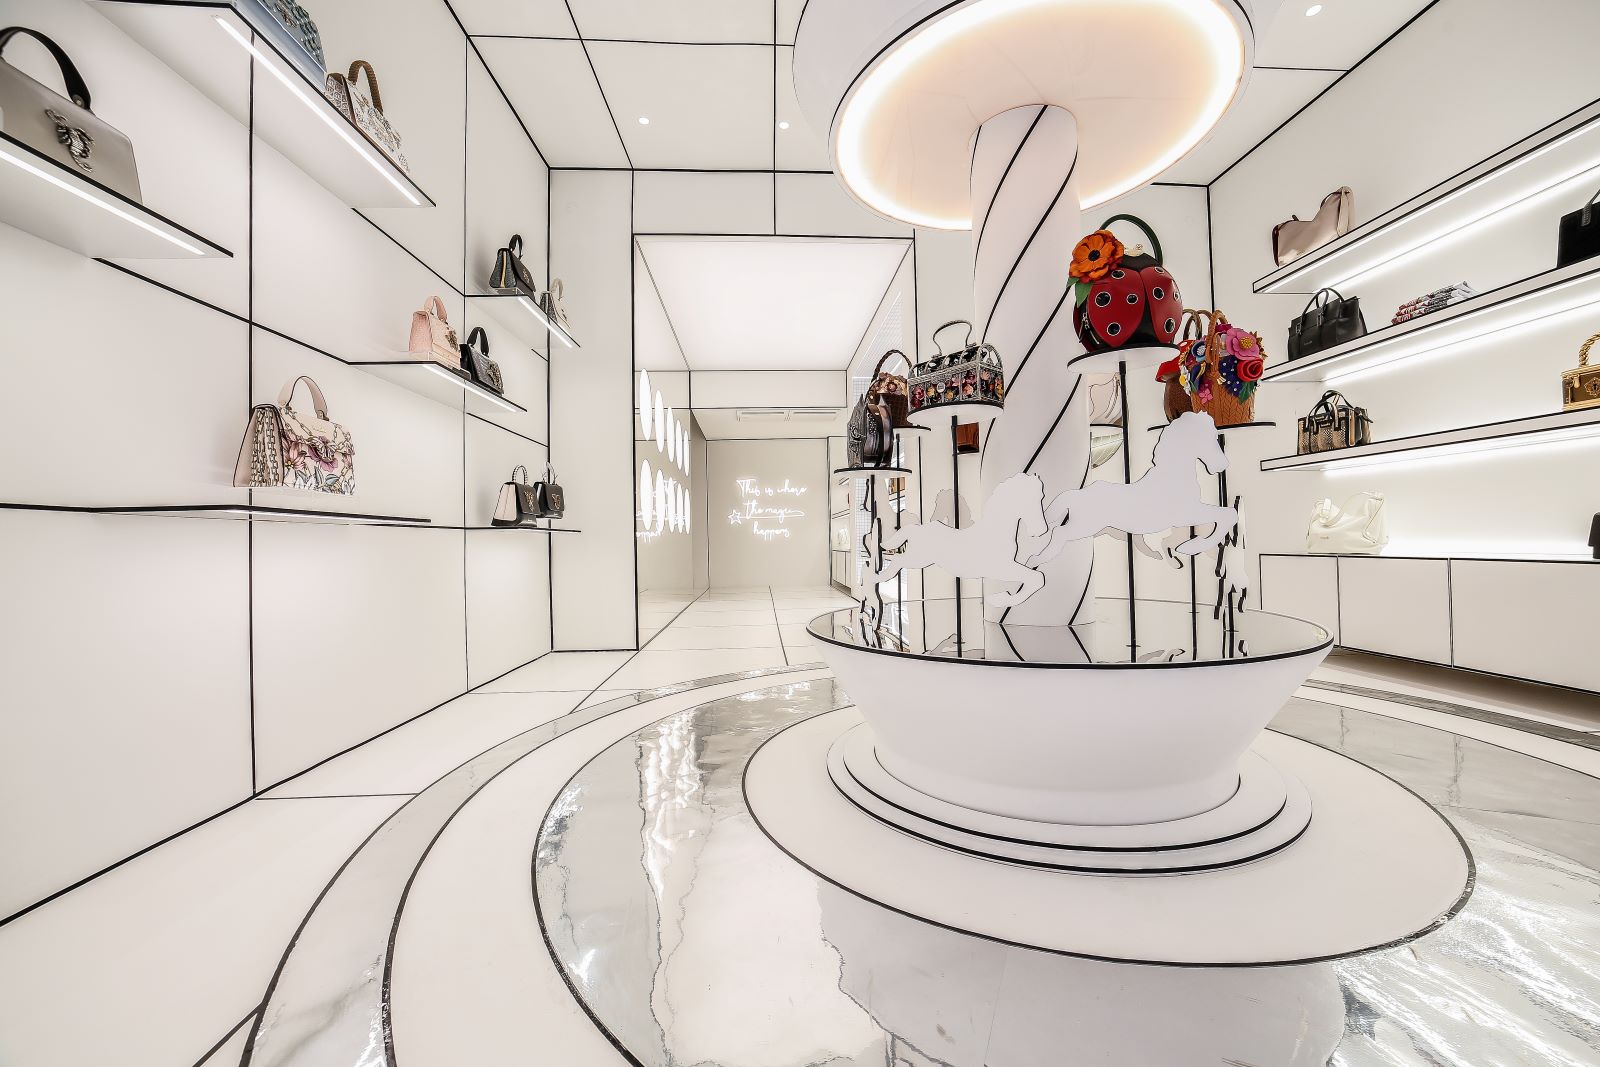 Louis Vuitton Firenze Store In Firenze, Italy